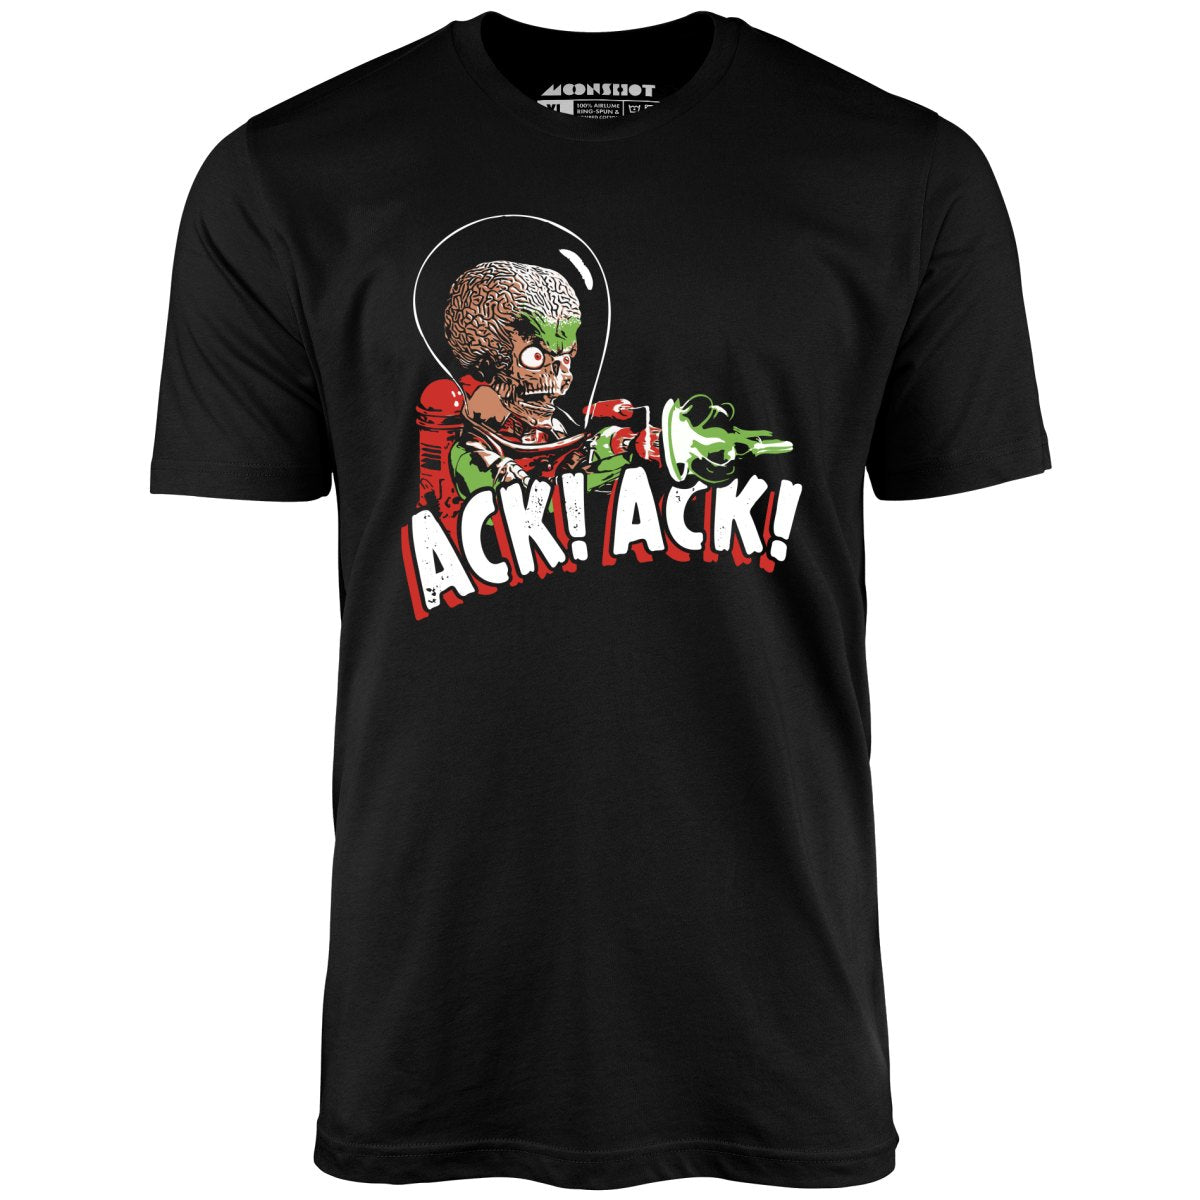 Ack! Ack! - Unisex T-Shirt